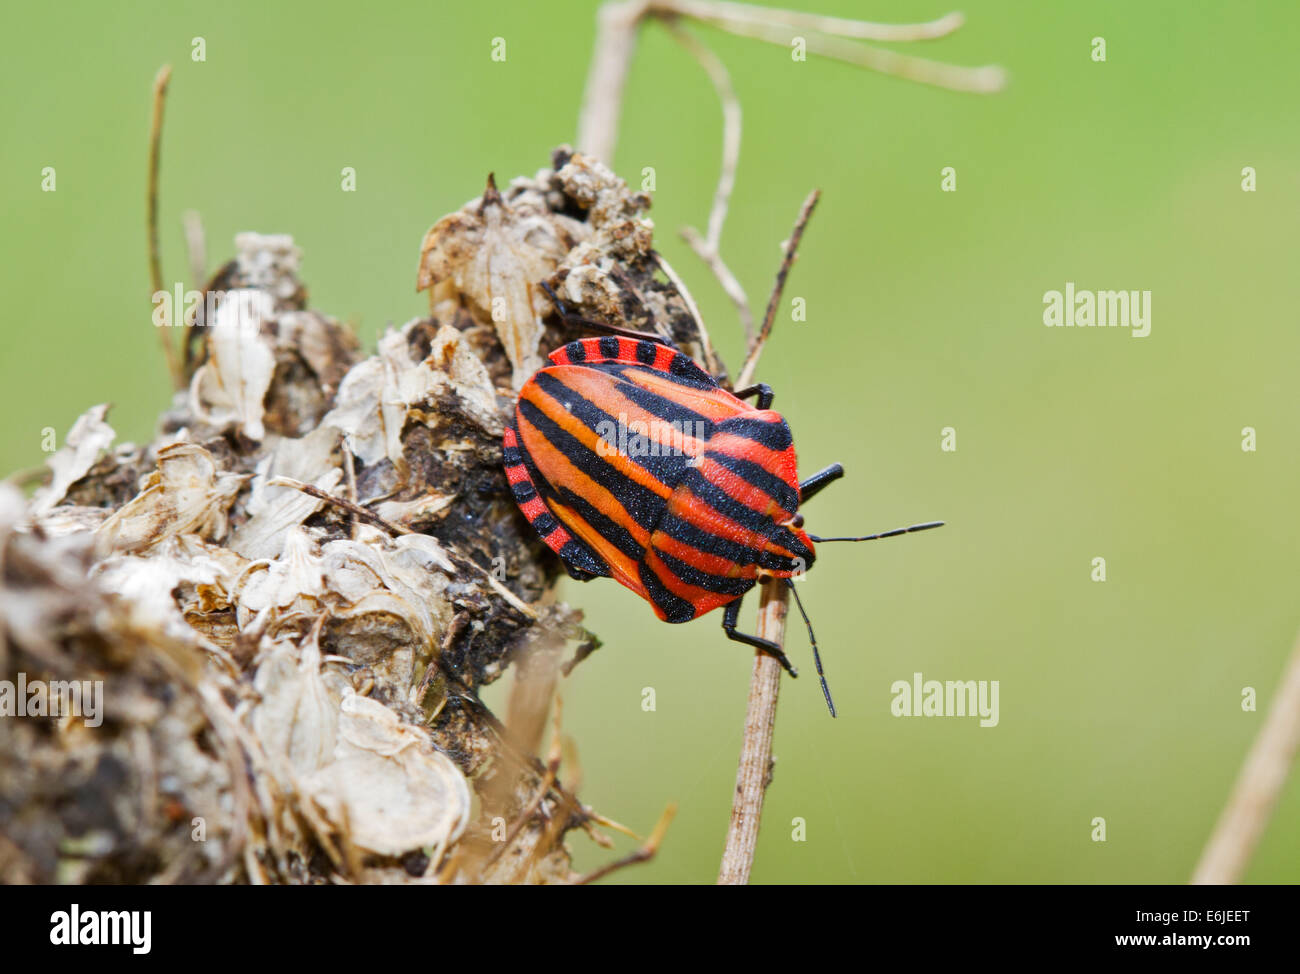 Italian Striped-Bug, also known as Minstrel Bug, an orange and black striped shield bug Stock Photo